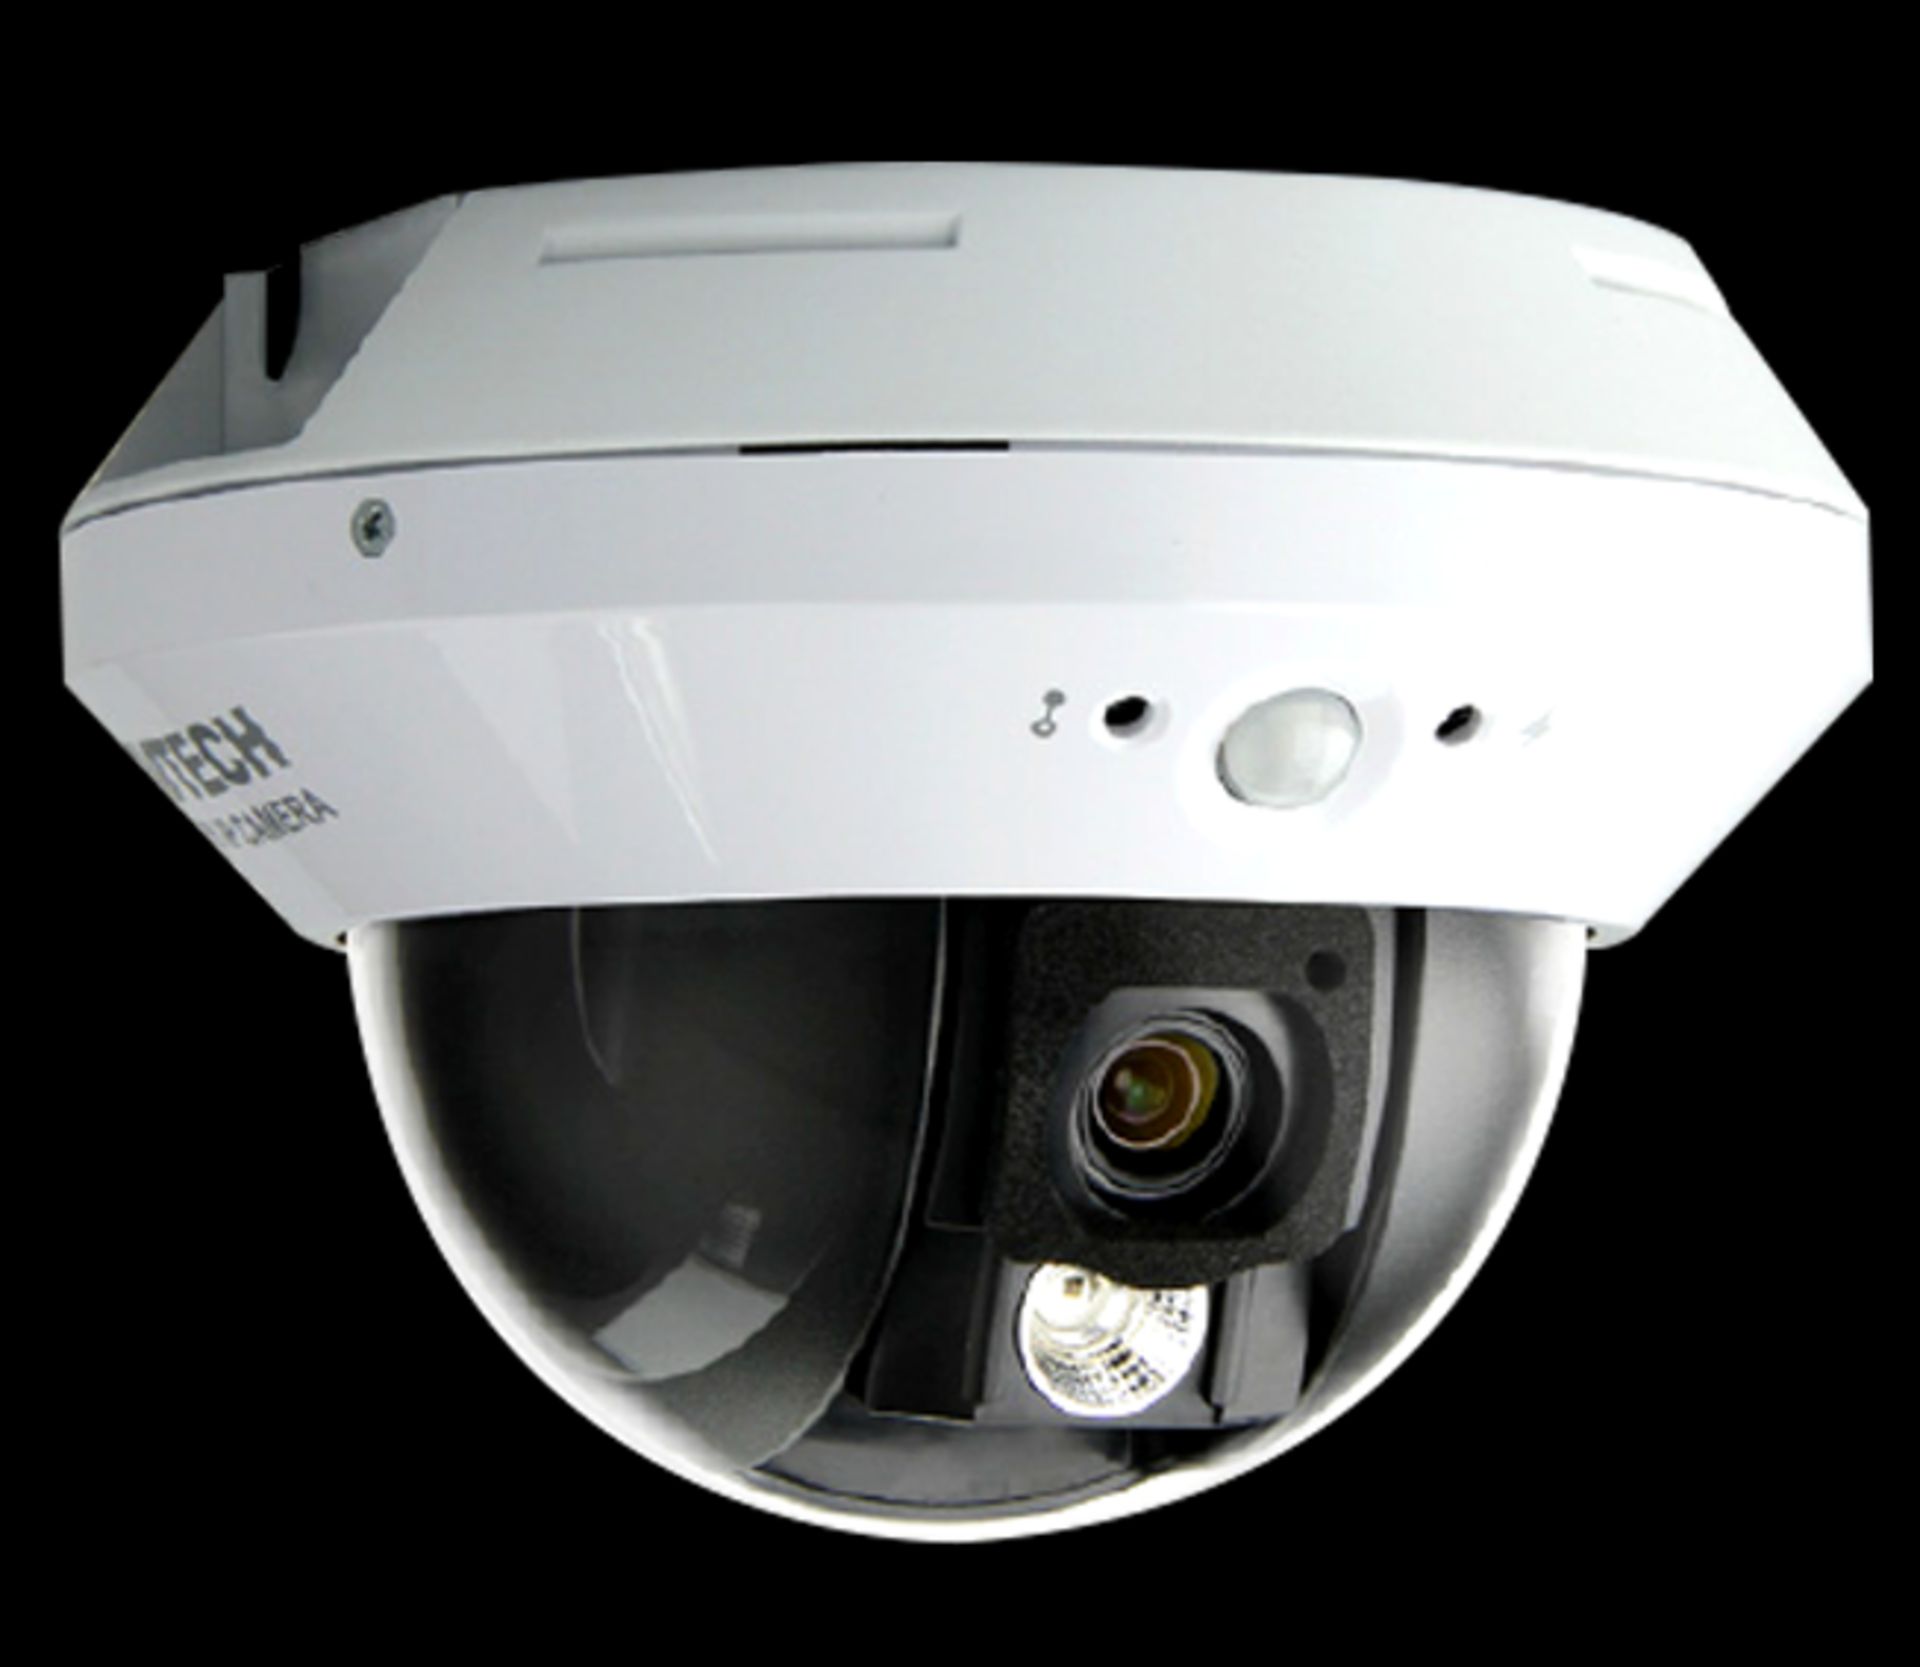 V *TRADE QTY* Brand New Avtech 420 TVL Eyeball IR Dome Camera with Bracket - IP65 - IR Range 4mm -